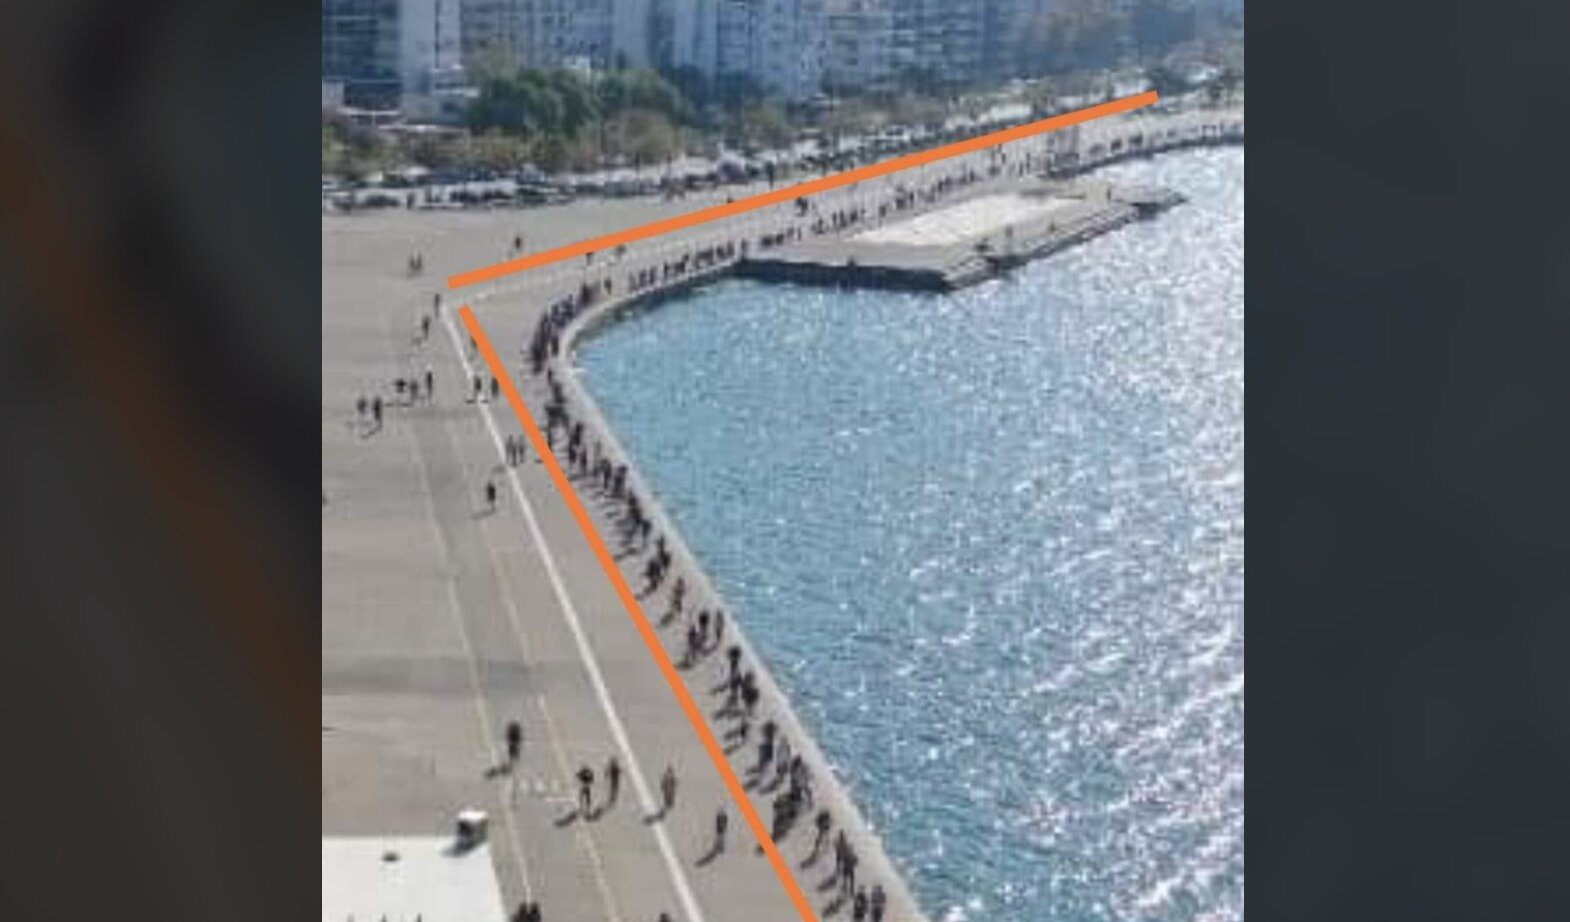 Eκατοντάδες στην ουρά για δωρεάν rapid test στην παραλία της Θεσσαλονίκης. Βοηθούν στο να έχει άλλοθι η κυβέρνηση στο Lockdown!!!